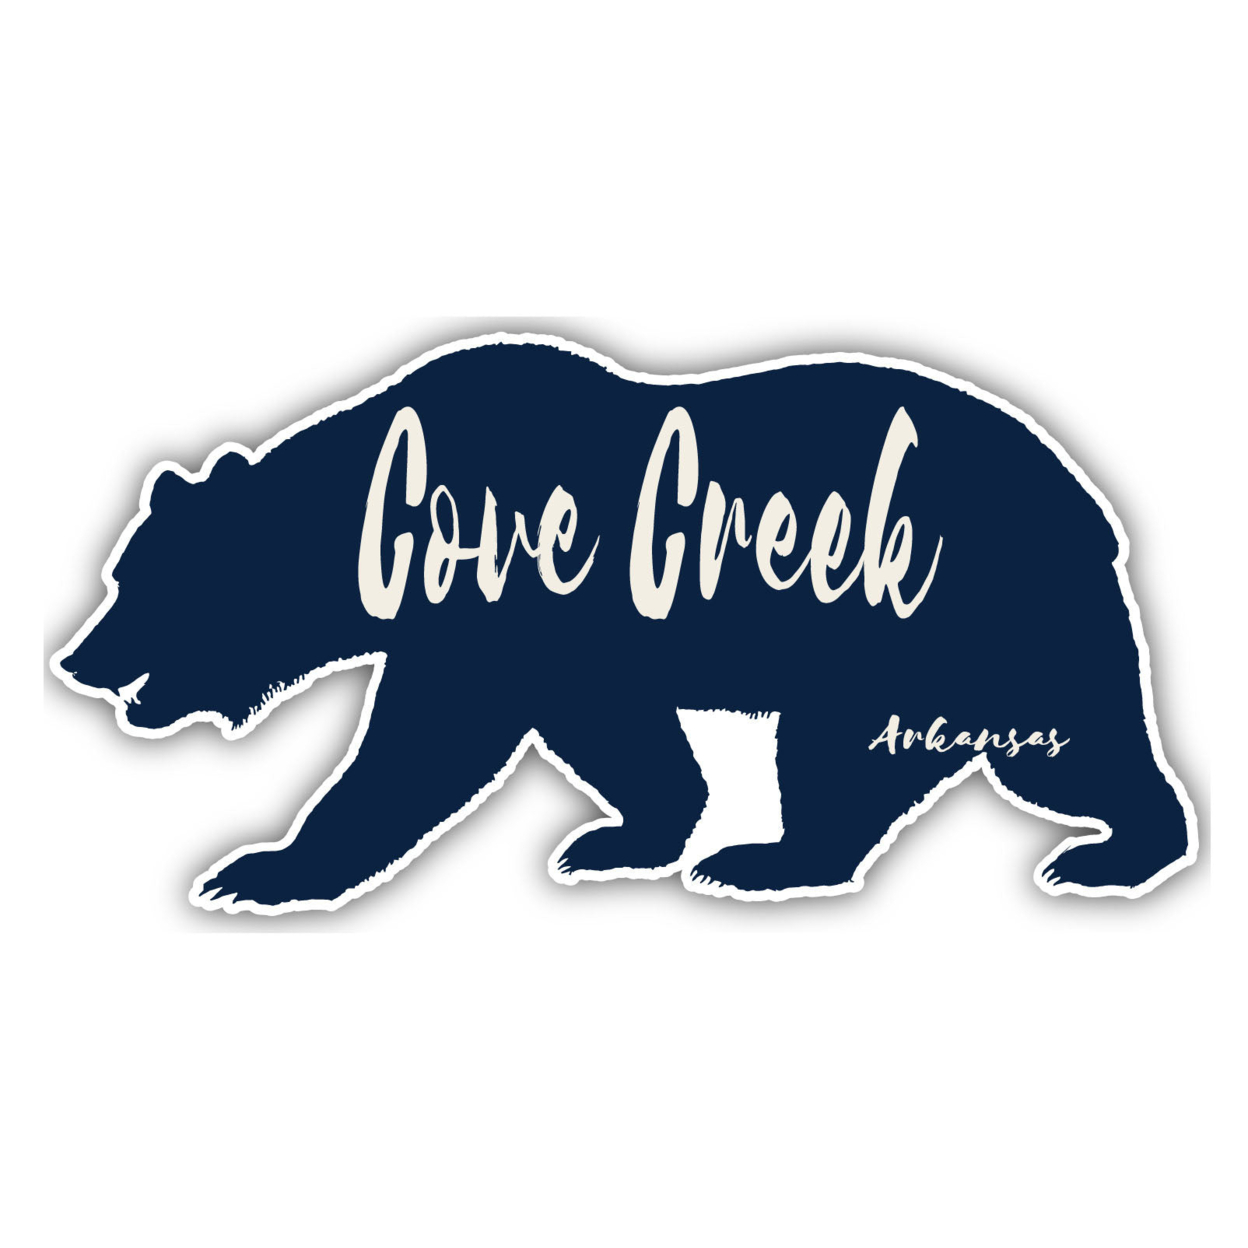 Cove Creek Arkansas Souvenir Decorative Stickers (Choose Theme And Size) - 4-Pack, 12-Inch, Bear